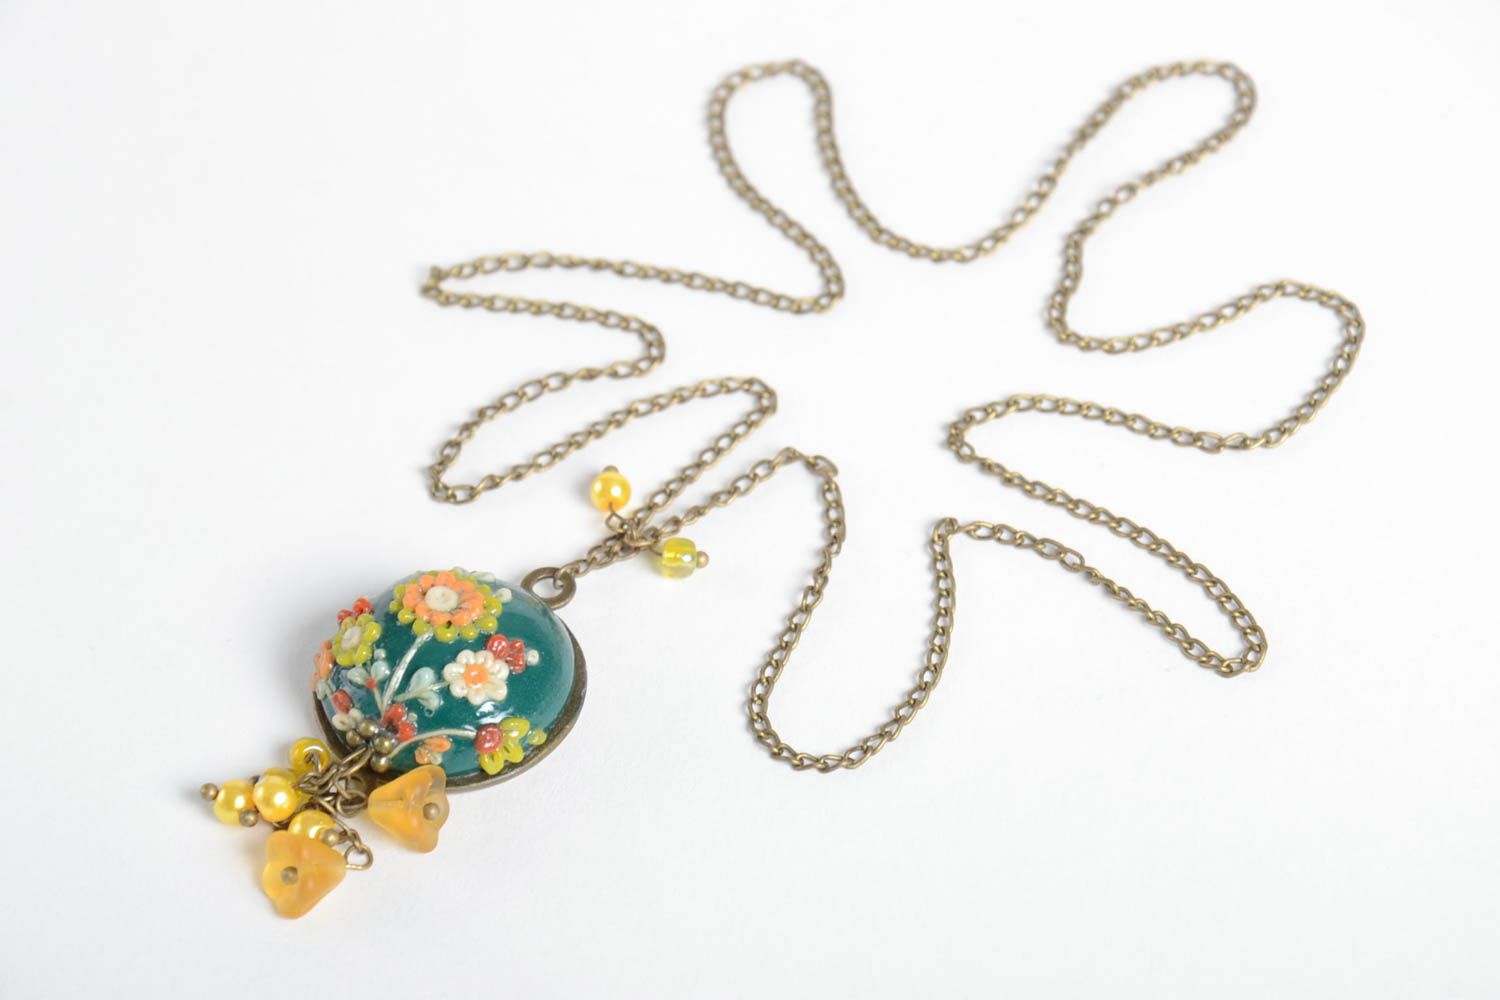 Unusual handmade plastic pendant cool jewelry designs polymer clay ideas photo 3